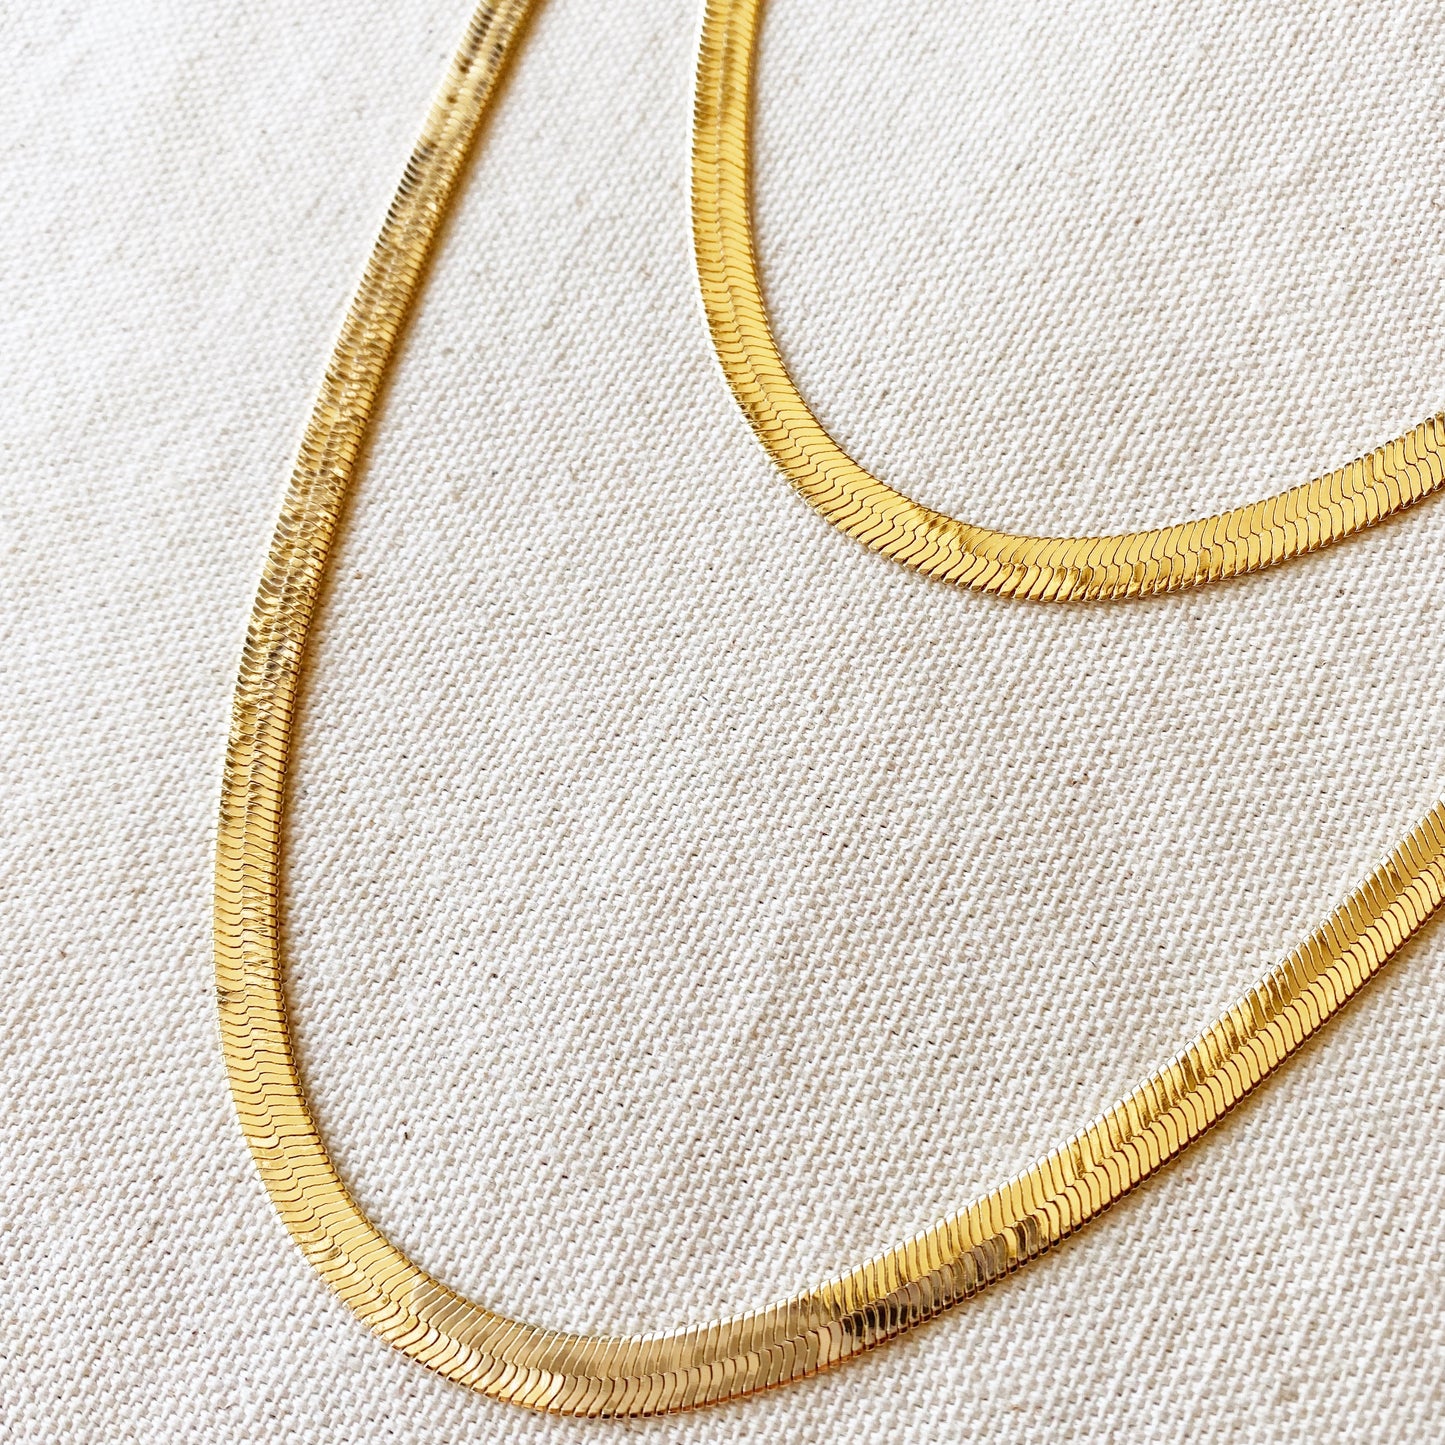 GoldFi 18k Gold Filled 6.0mm Thickness Herringbone Chain